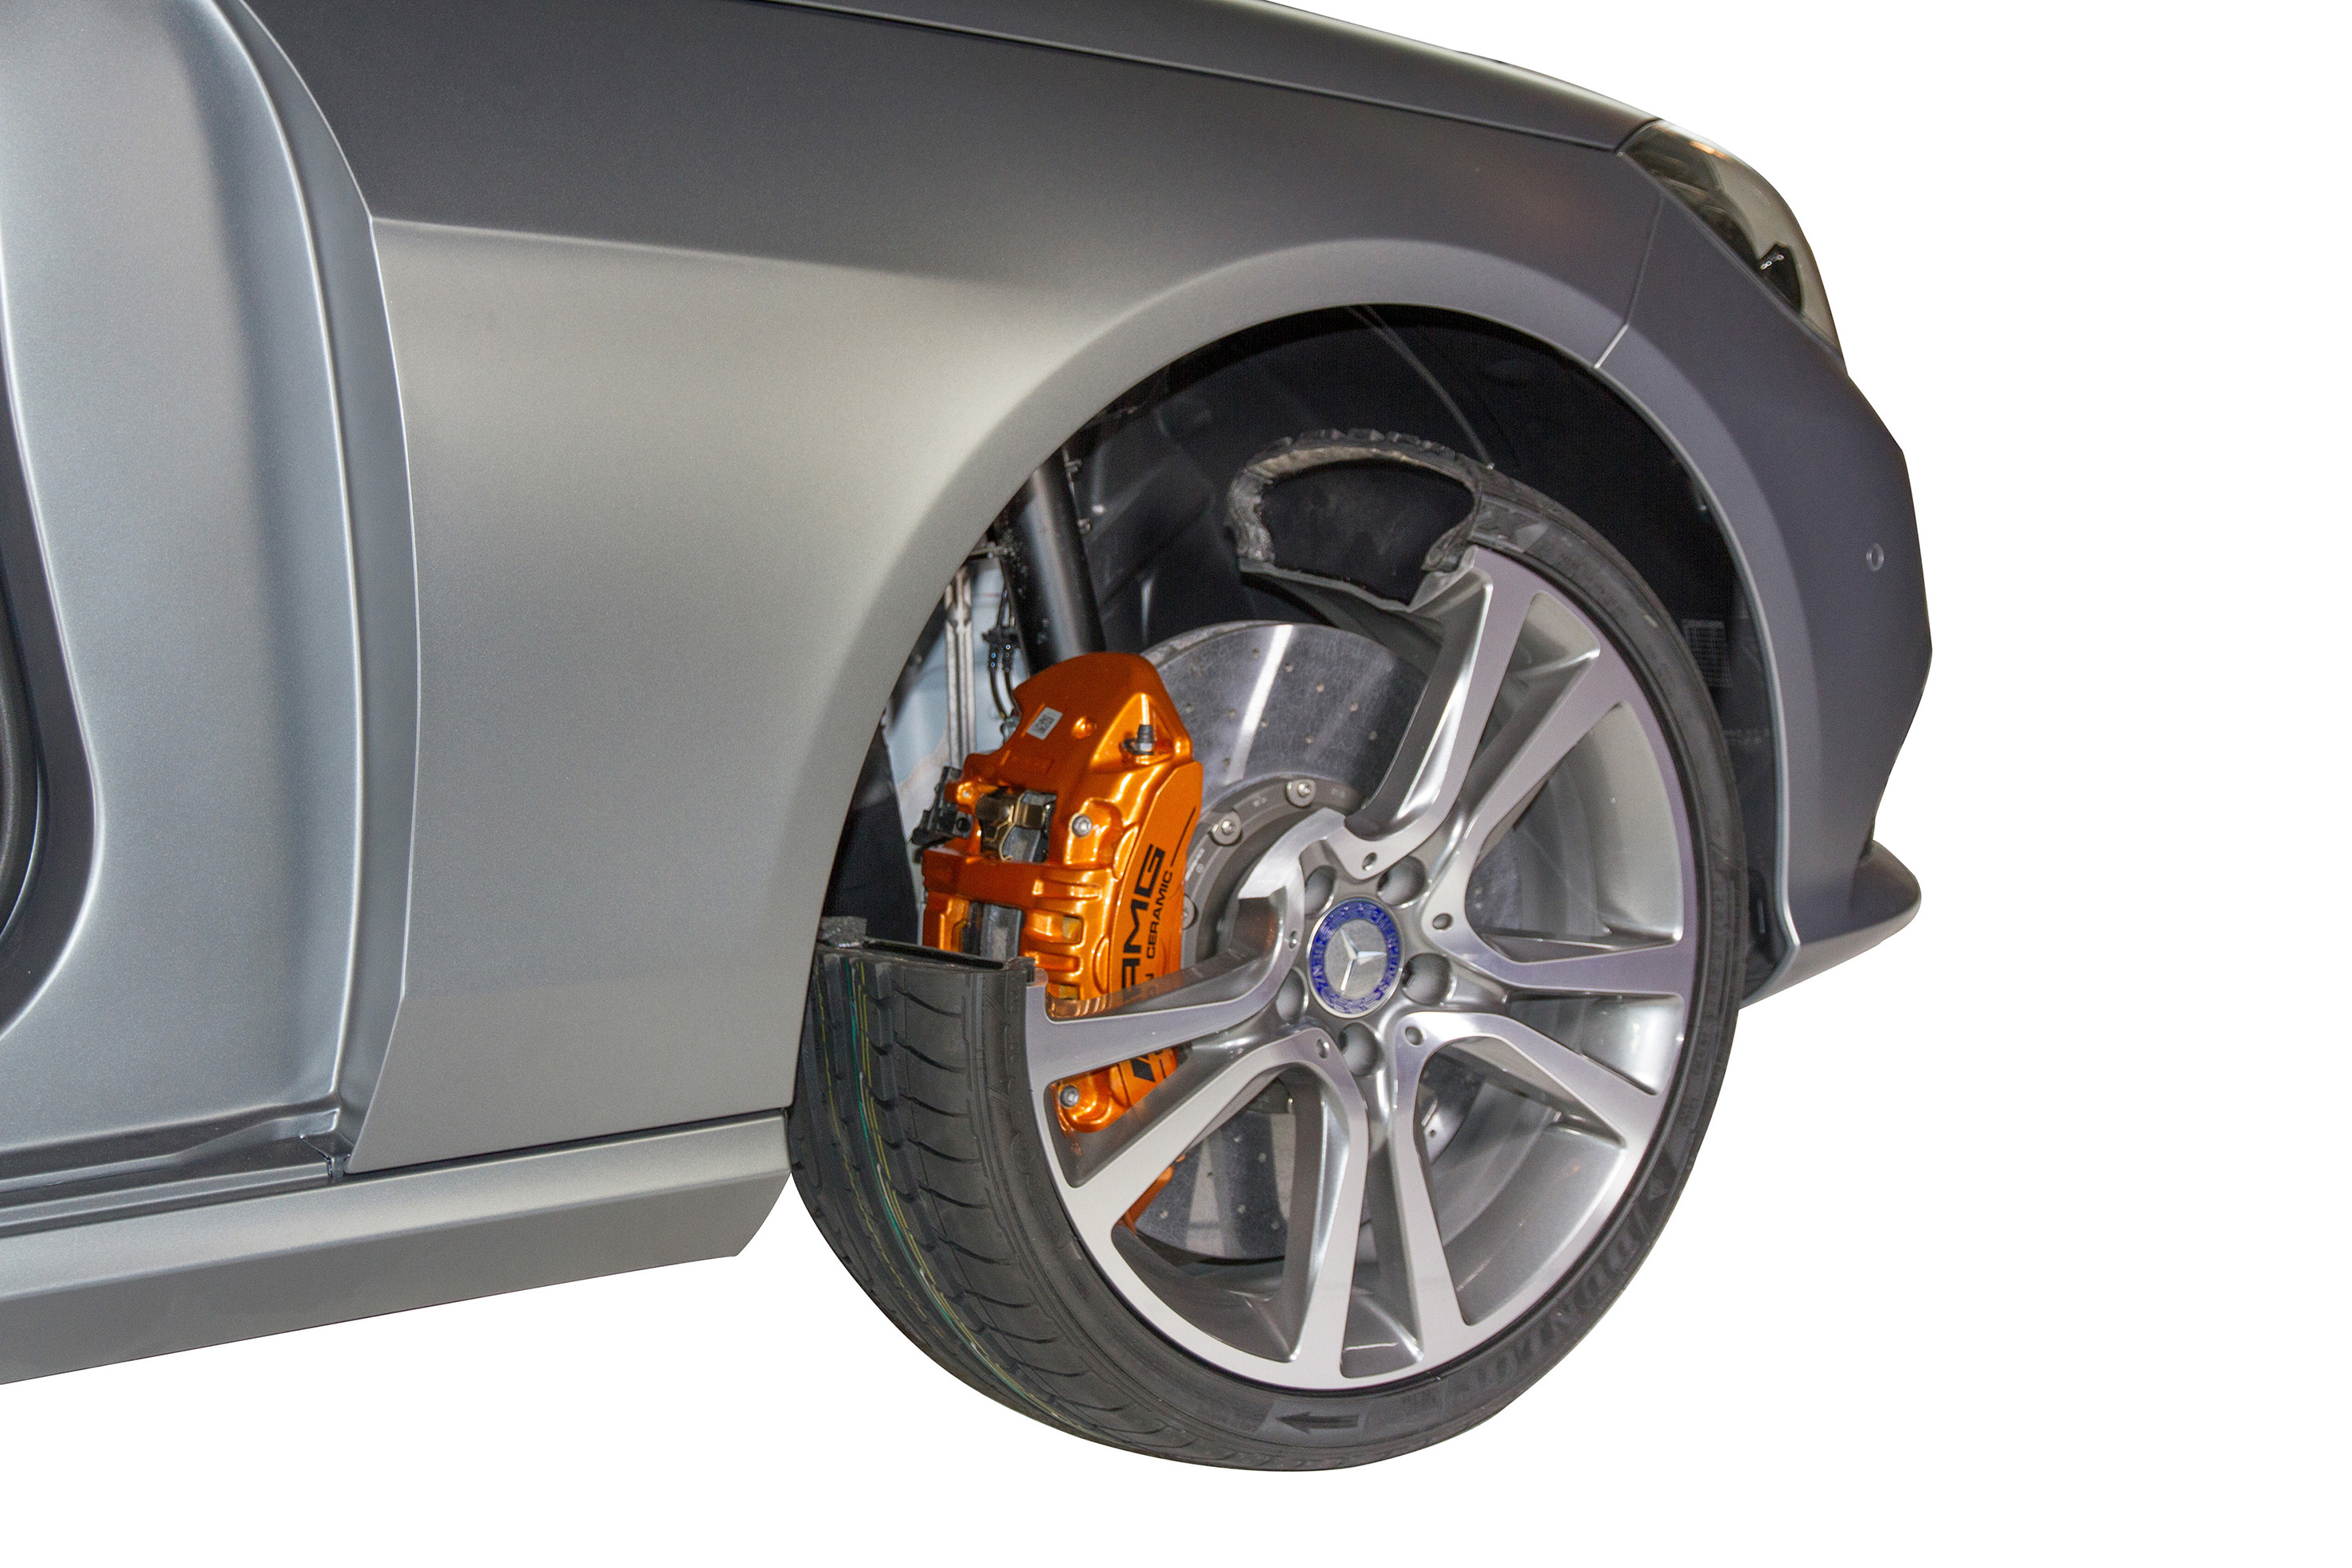 Carbon fibre brake brakes revealed on TexCar